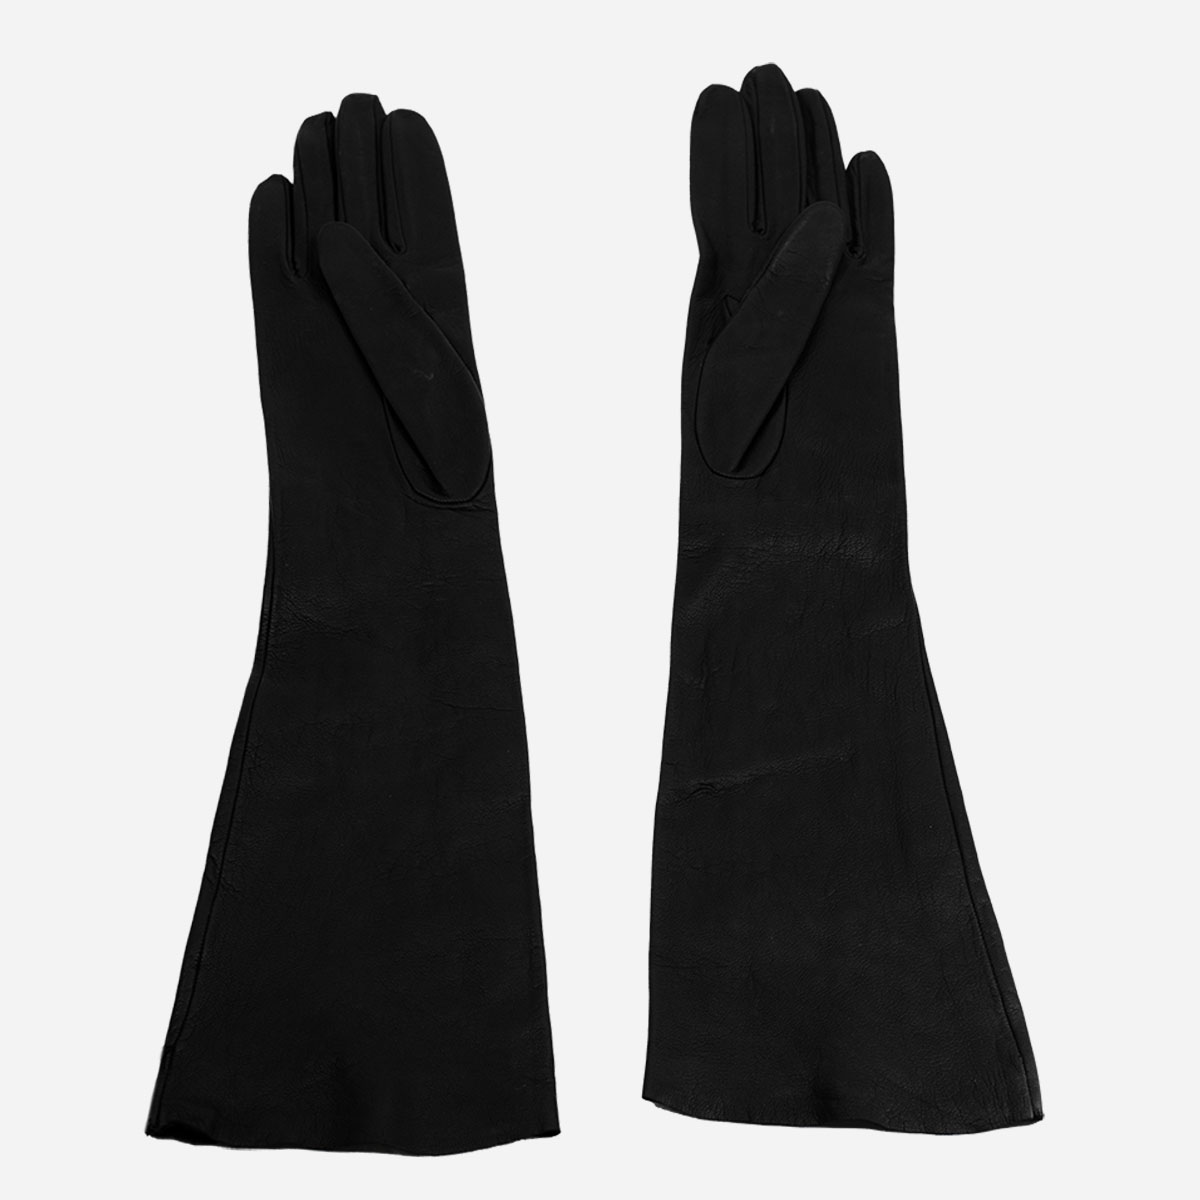 1950s Italian black leather gloves